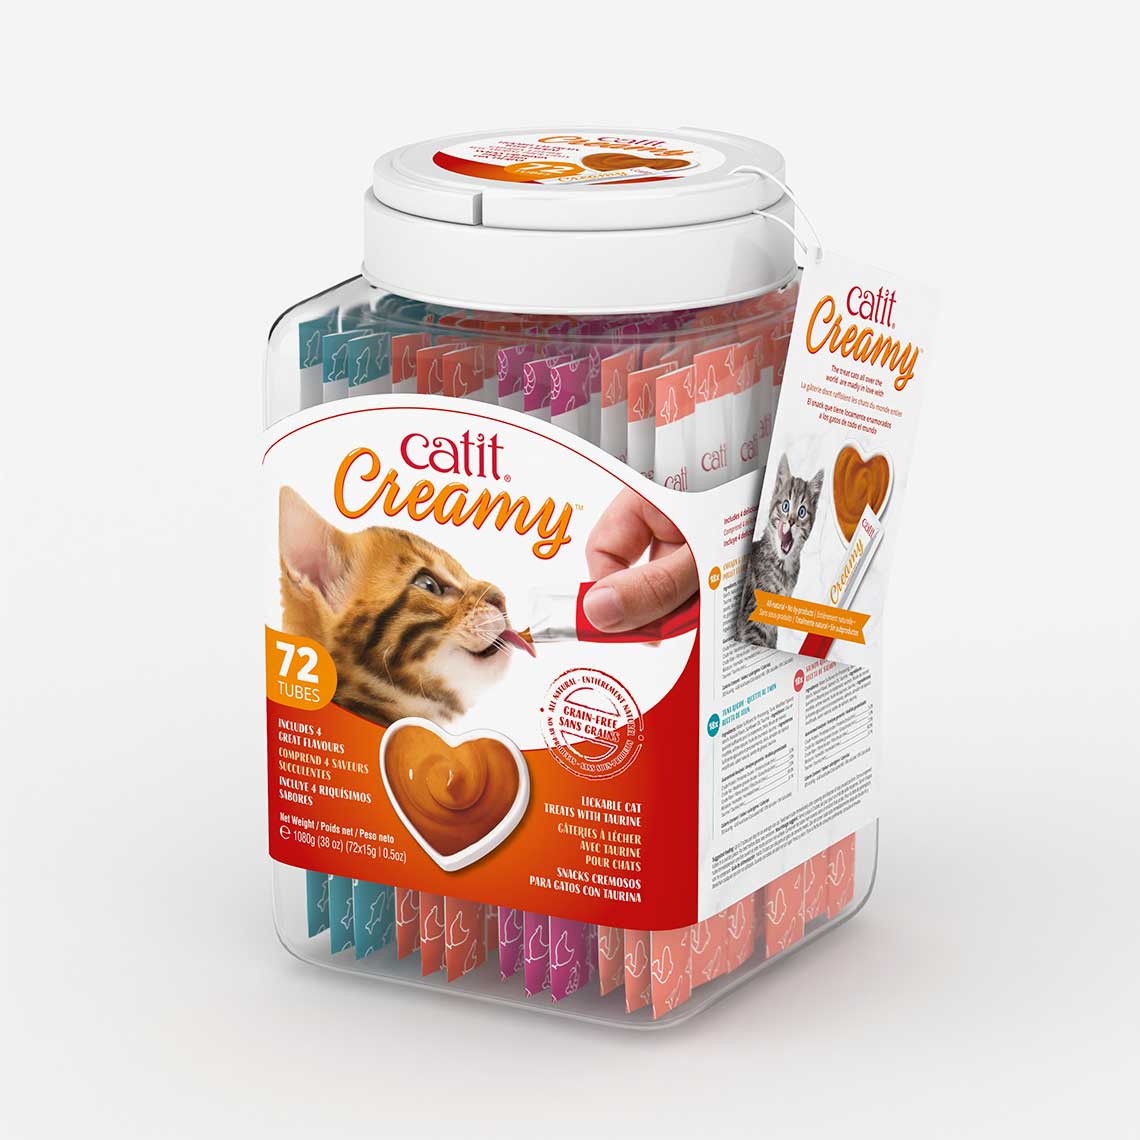 Catit Creamy Lickable Treats Gift Jar 72 x 15g